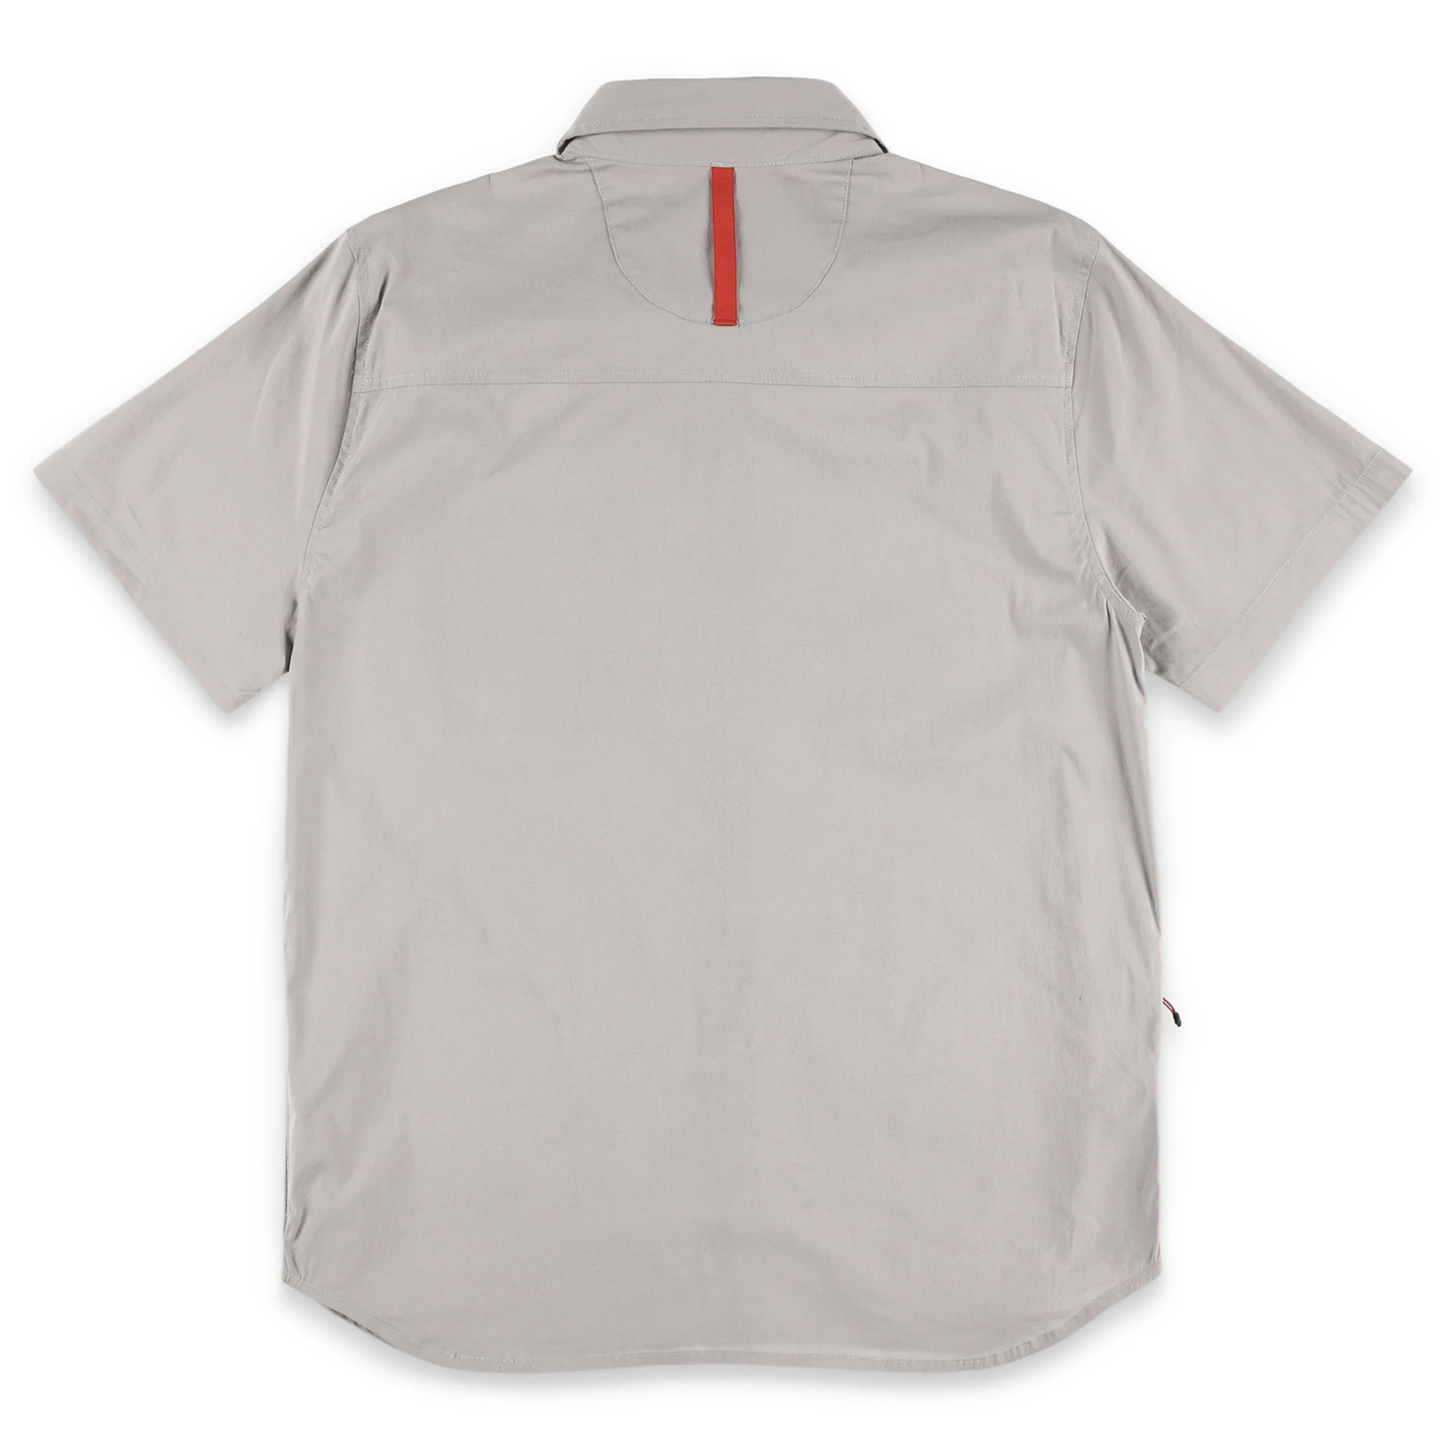 Men's Global Shirt - Short Sleeve